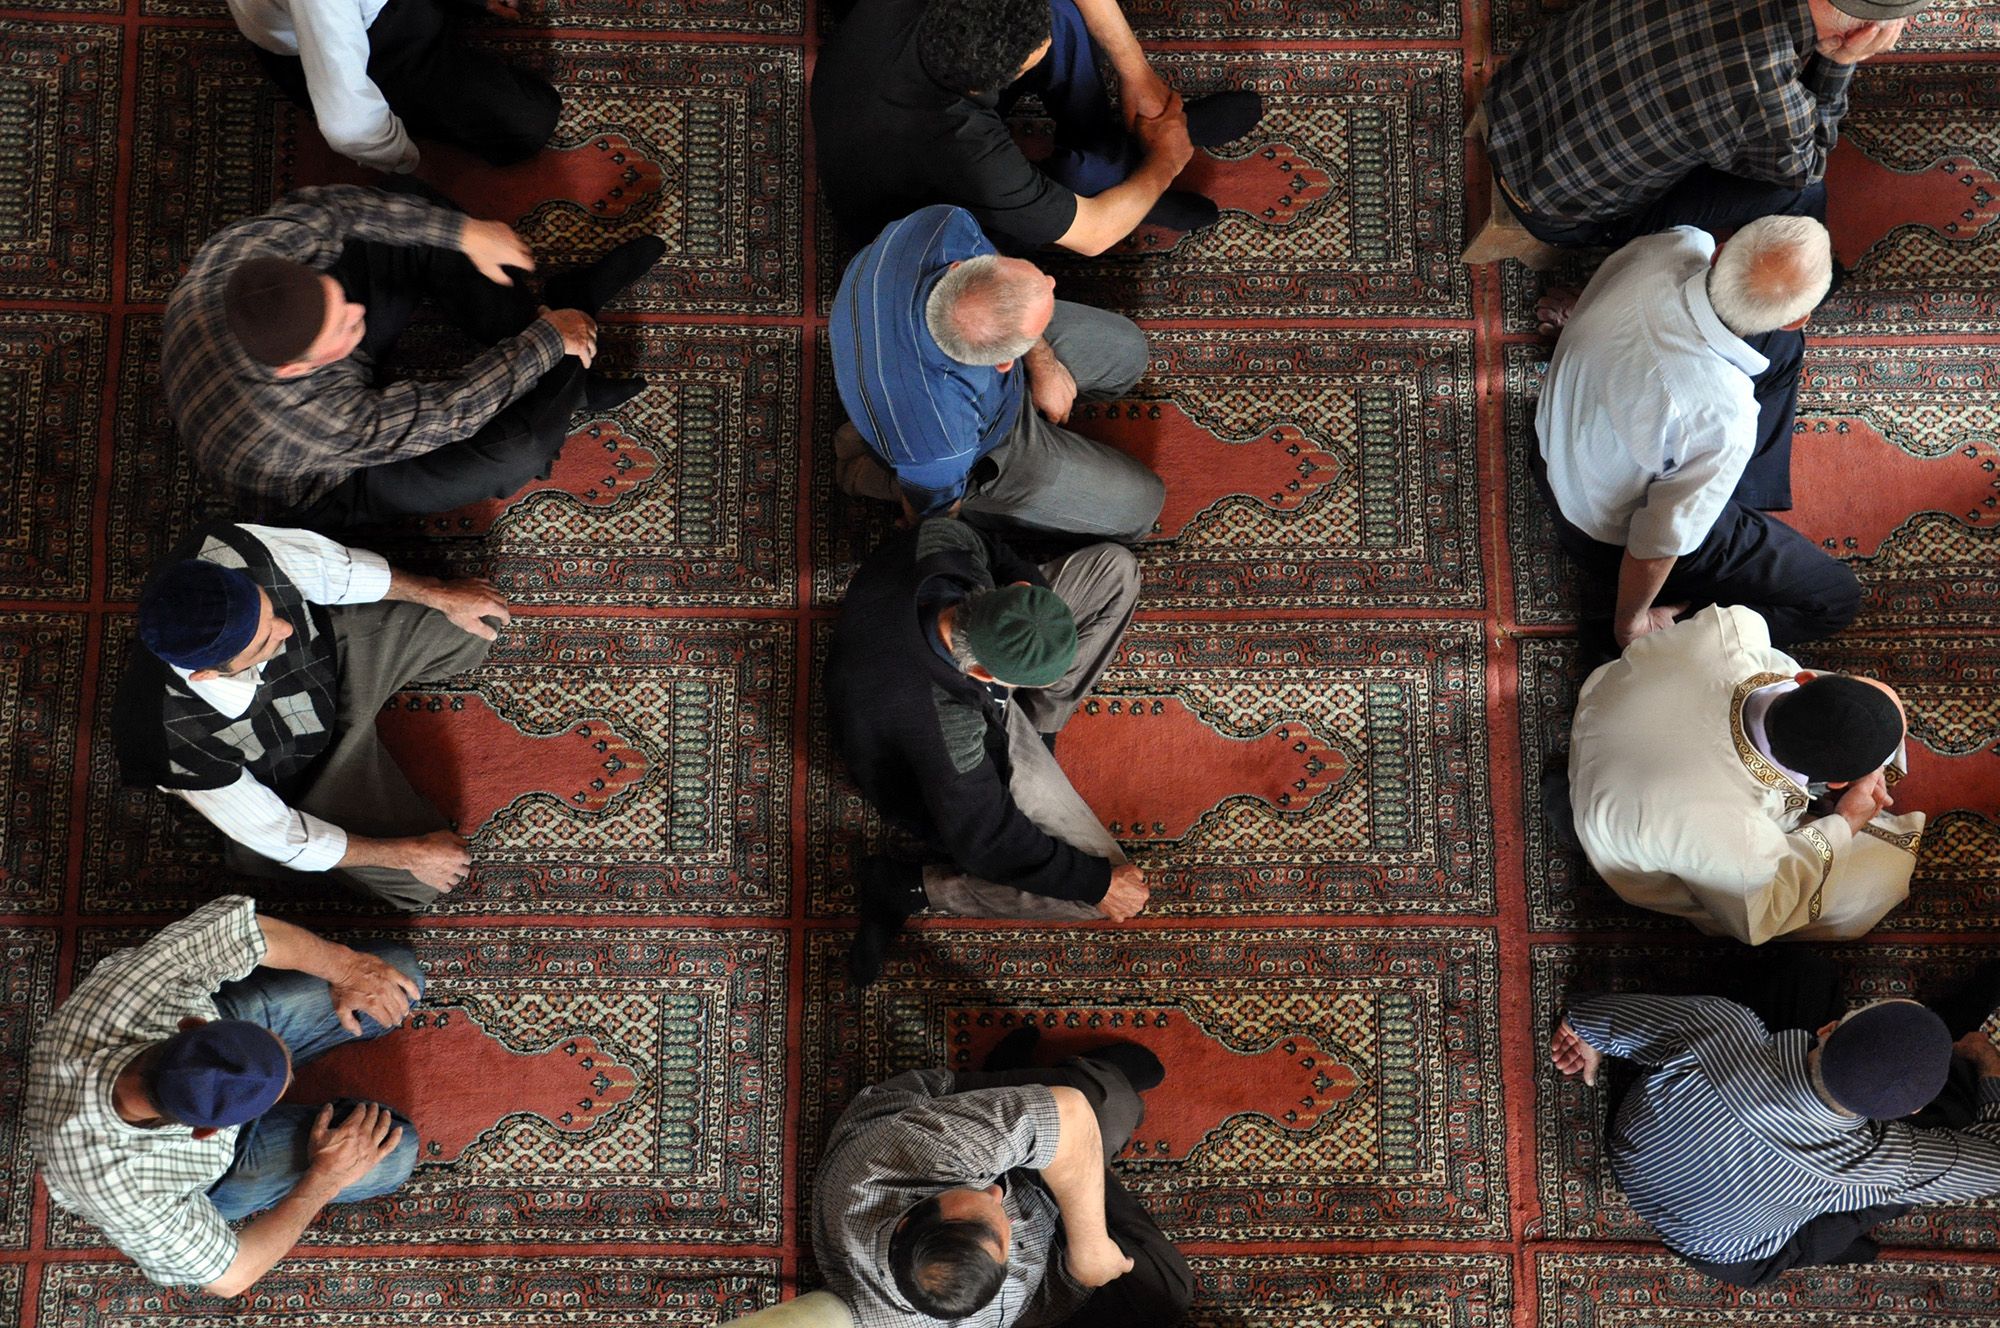 Mosque-in-Batumi-during-Friday-prayer.jpg